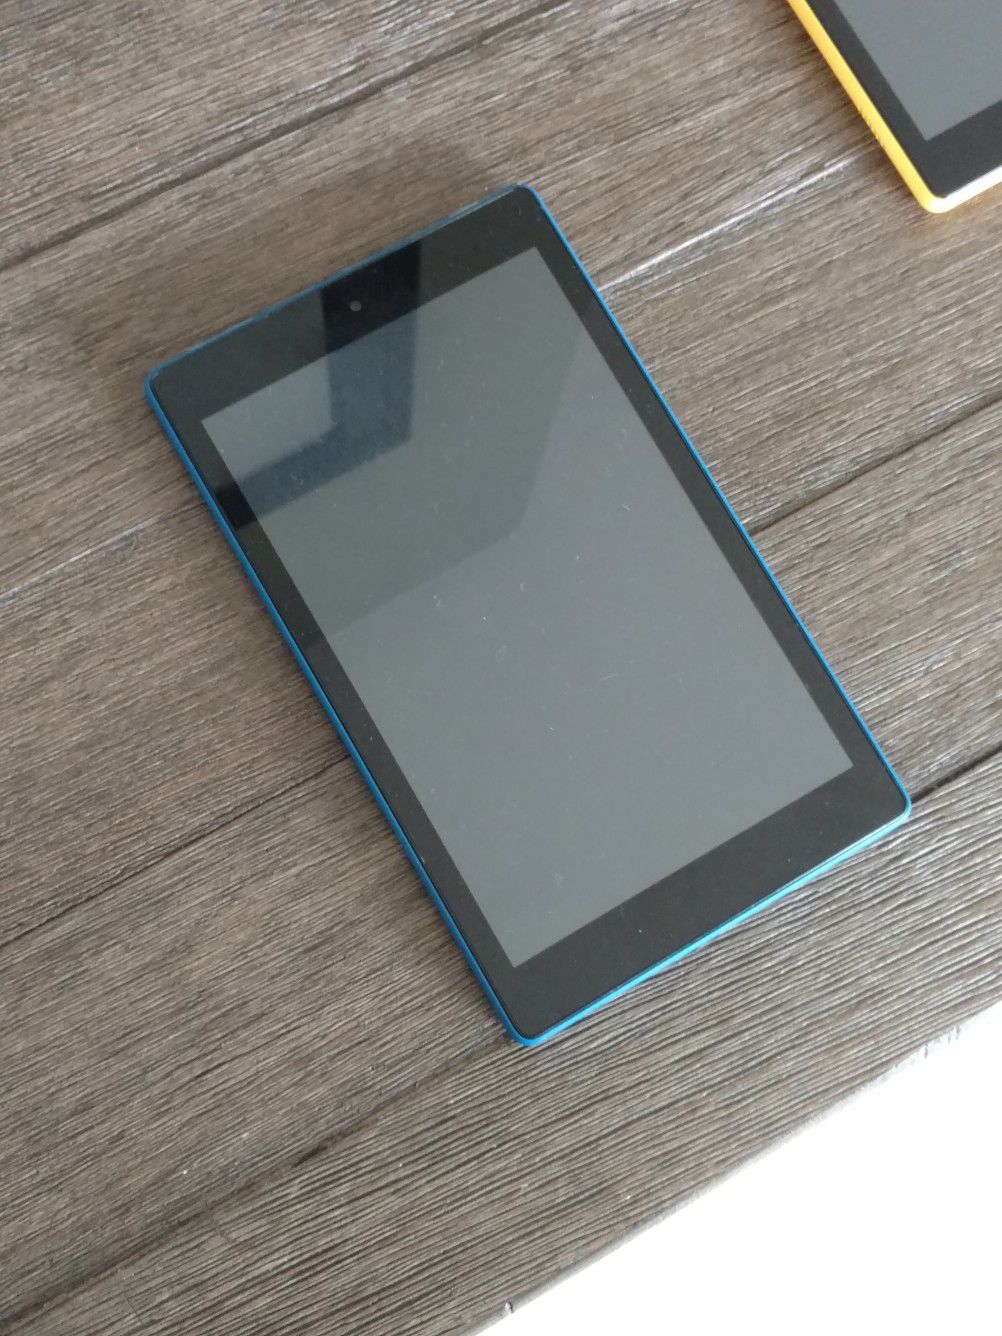 Amazon Fire HD 8 Kindle Tablet (8" HD Display, 16 GB) - Blue